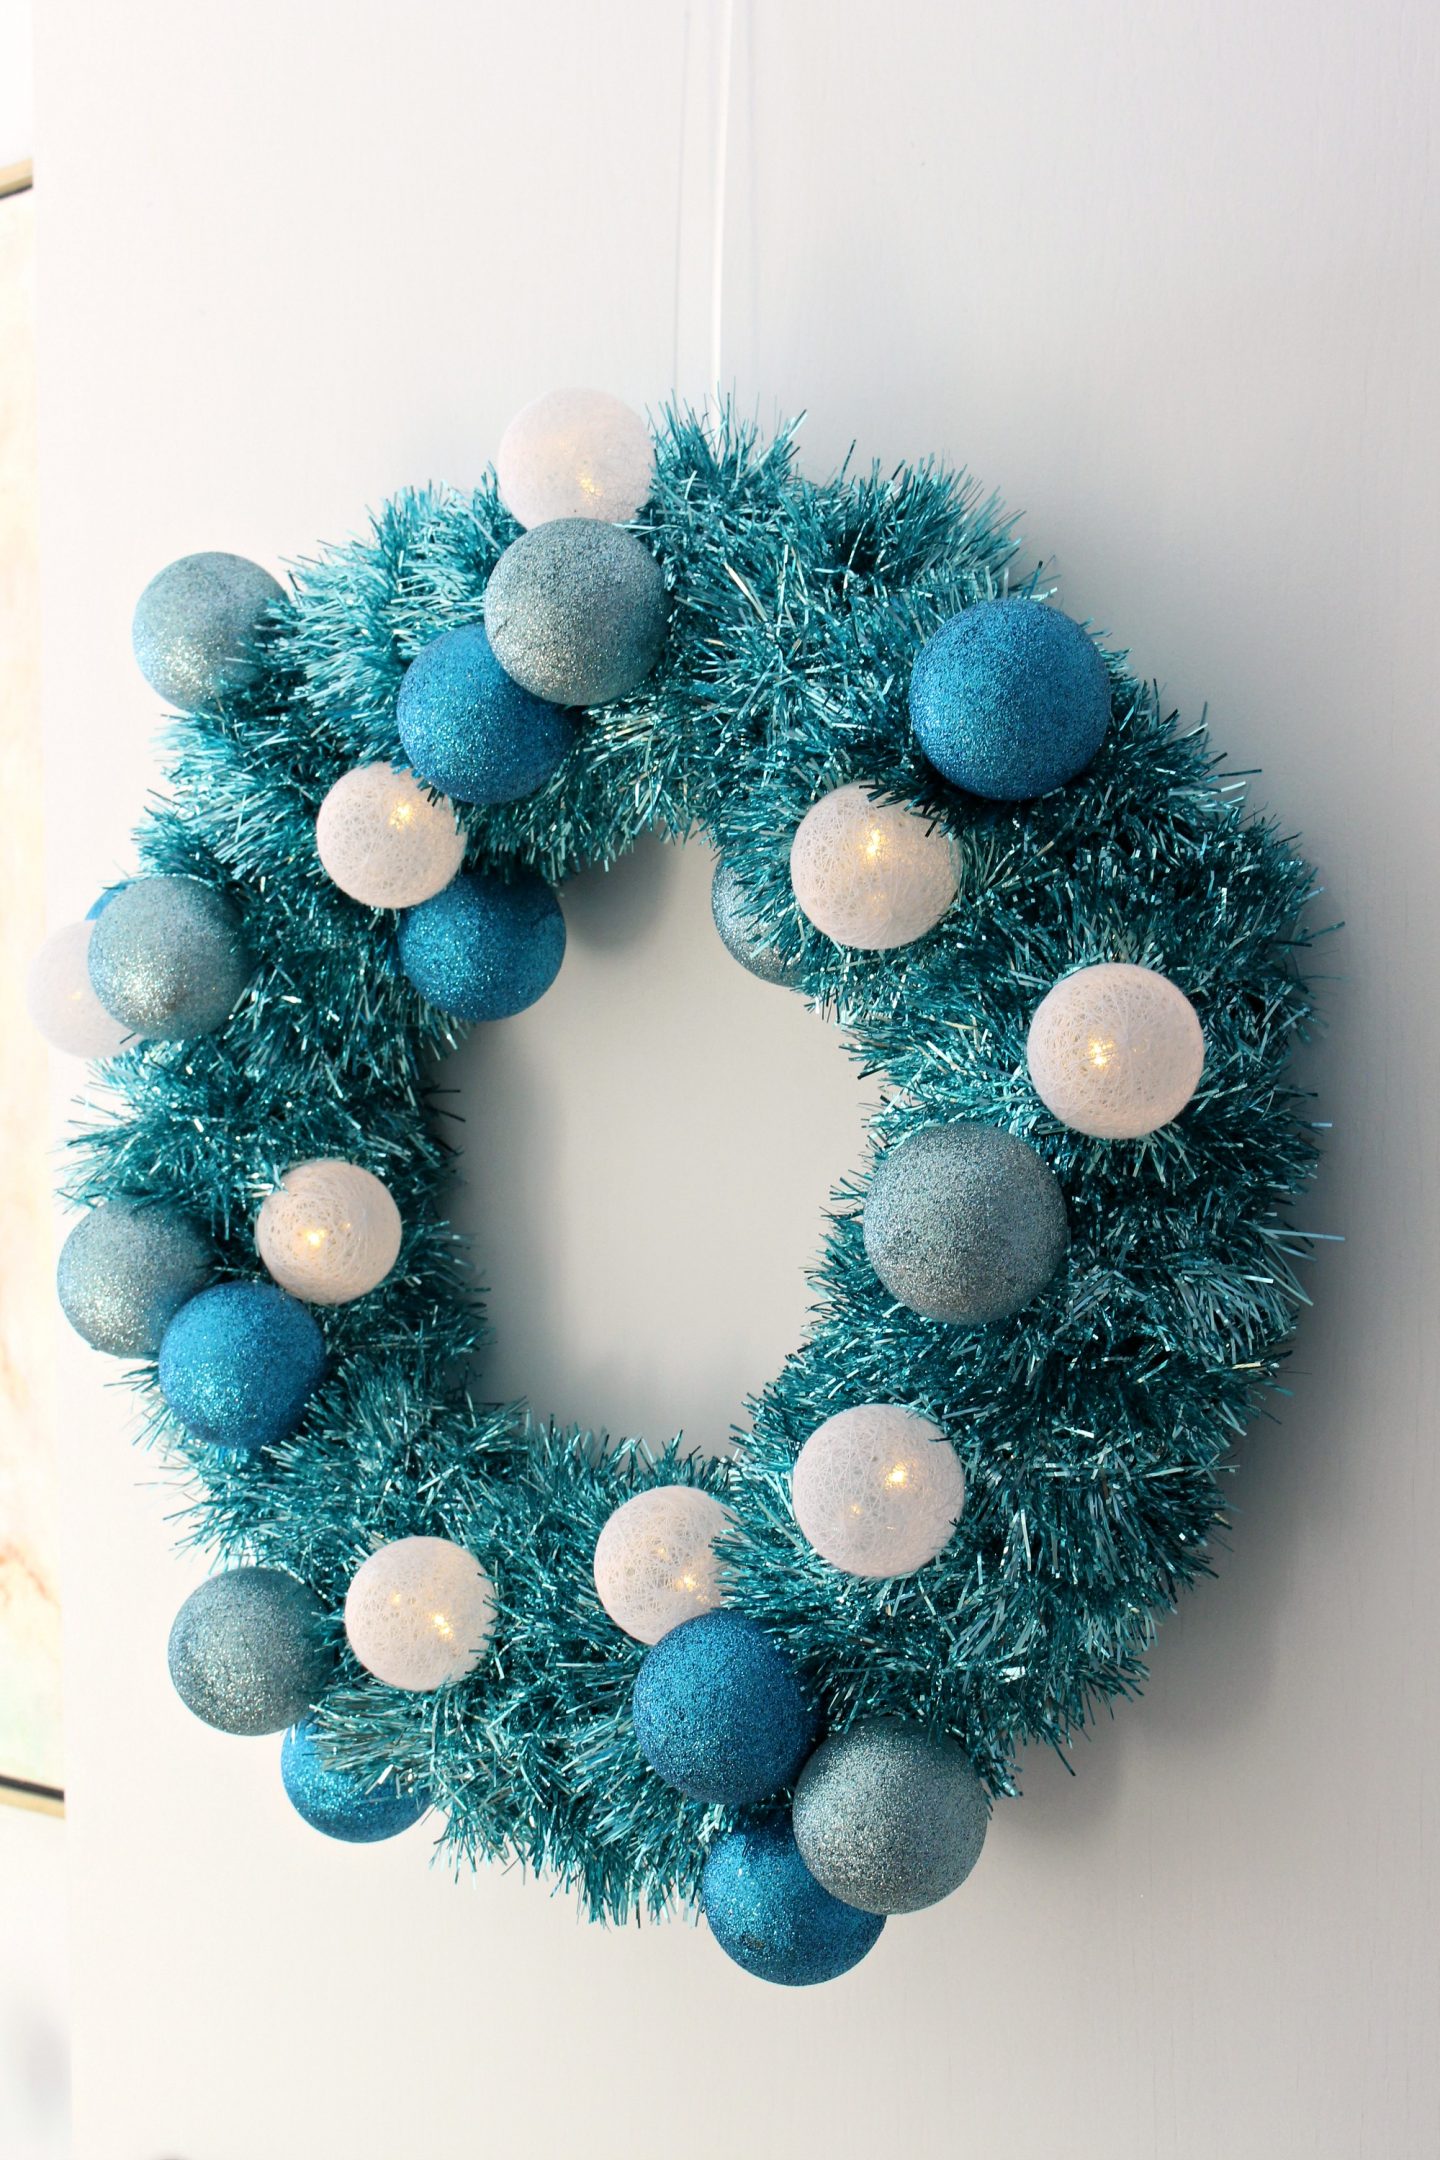 DIY Tinsel Wreath with Retro Vibes #diychristmas #tinsel #tinselwreath #retrochristmas